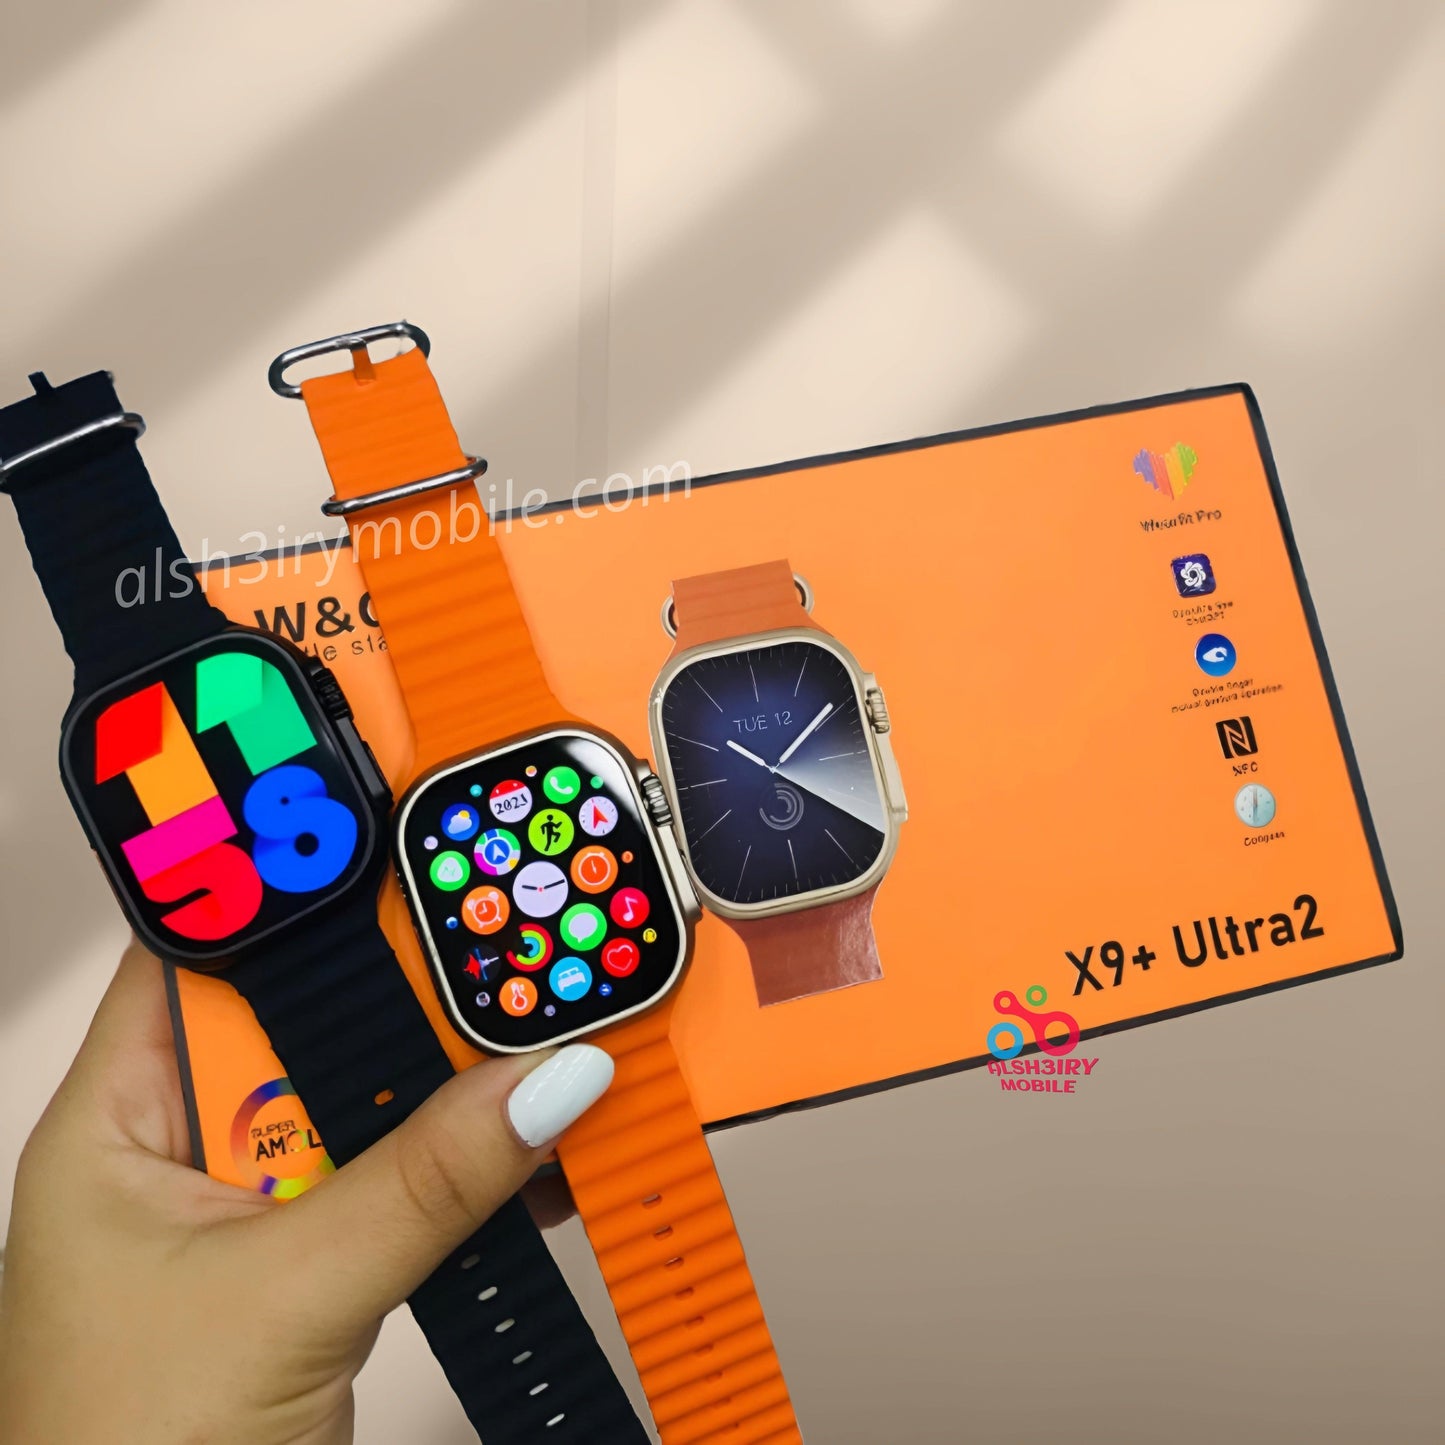 X9+ Ultra 2 Super Amoled Display Latest Smartwatch - Basra Mobile Center